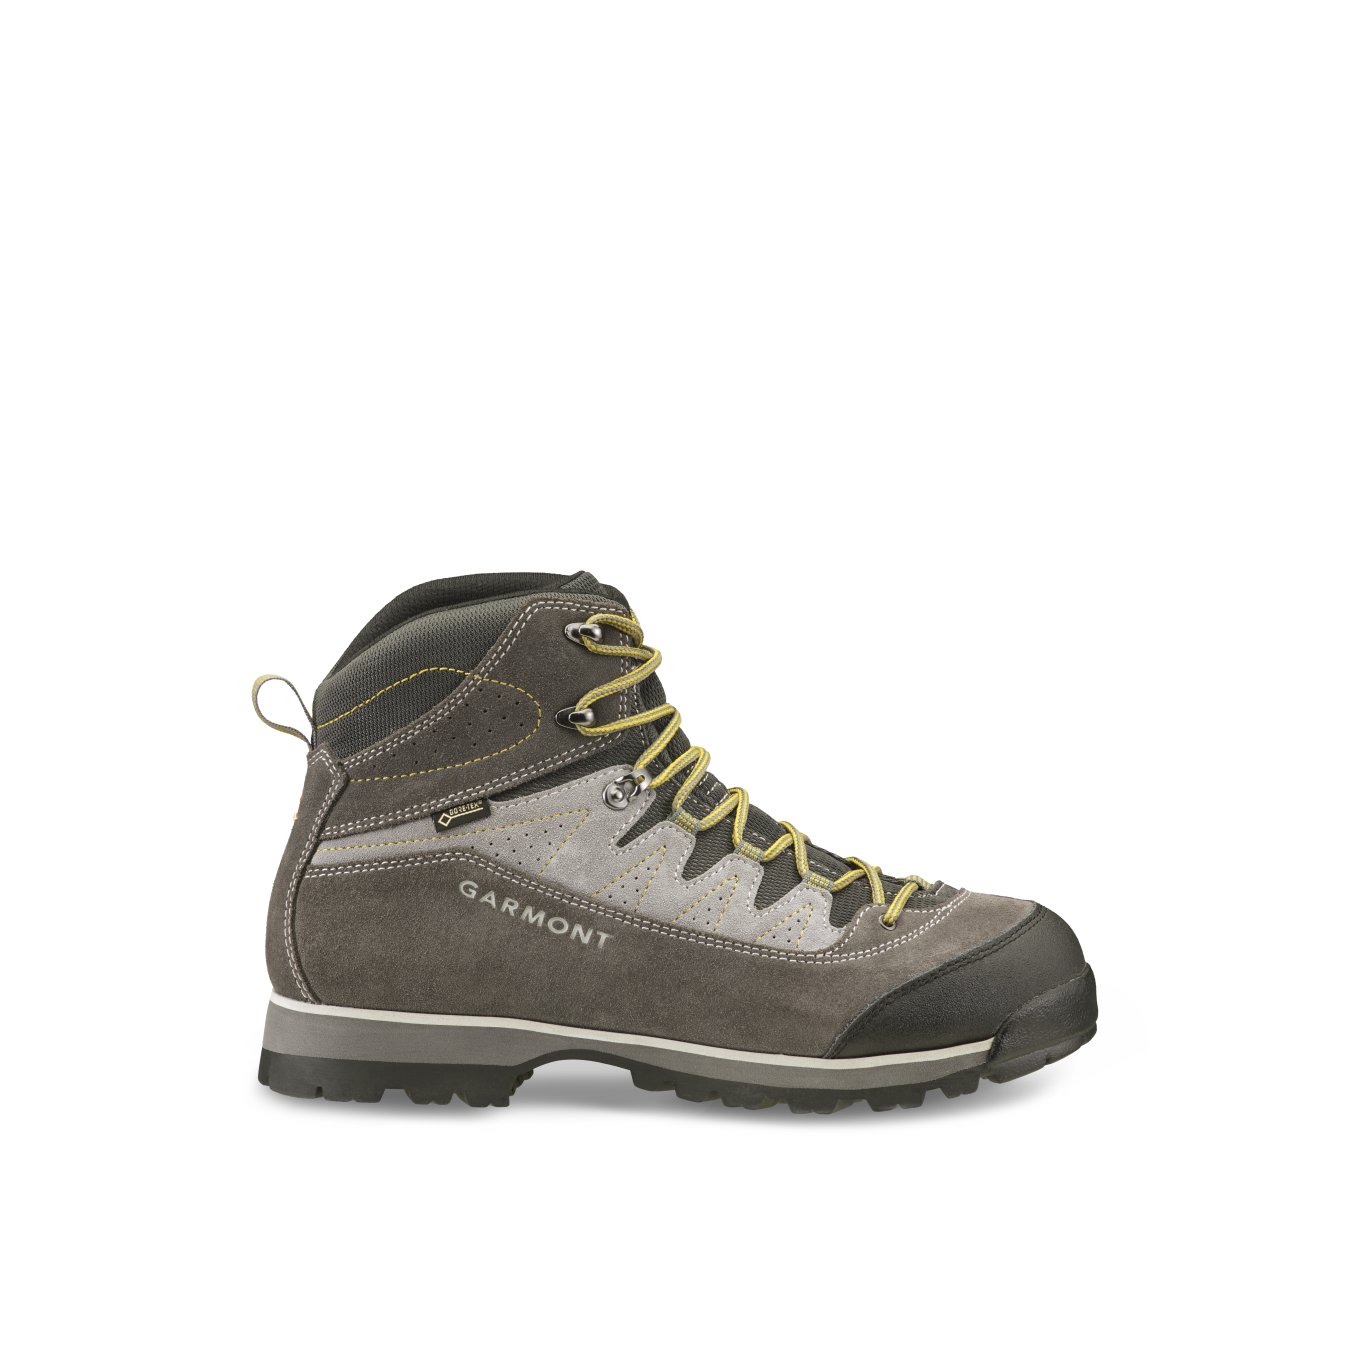 Garmont Lagorai GTX - Hiking shoes - Men's